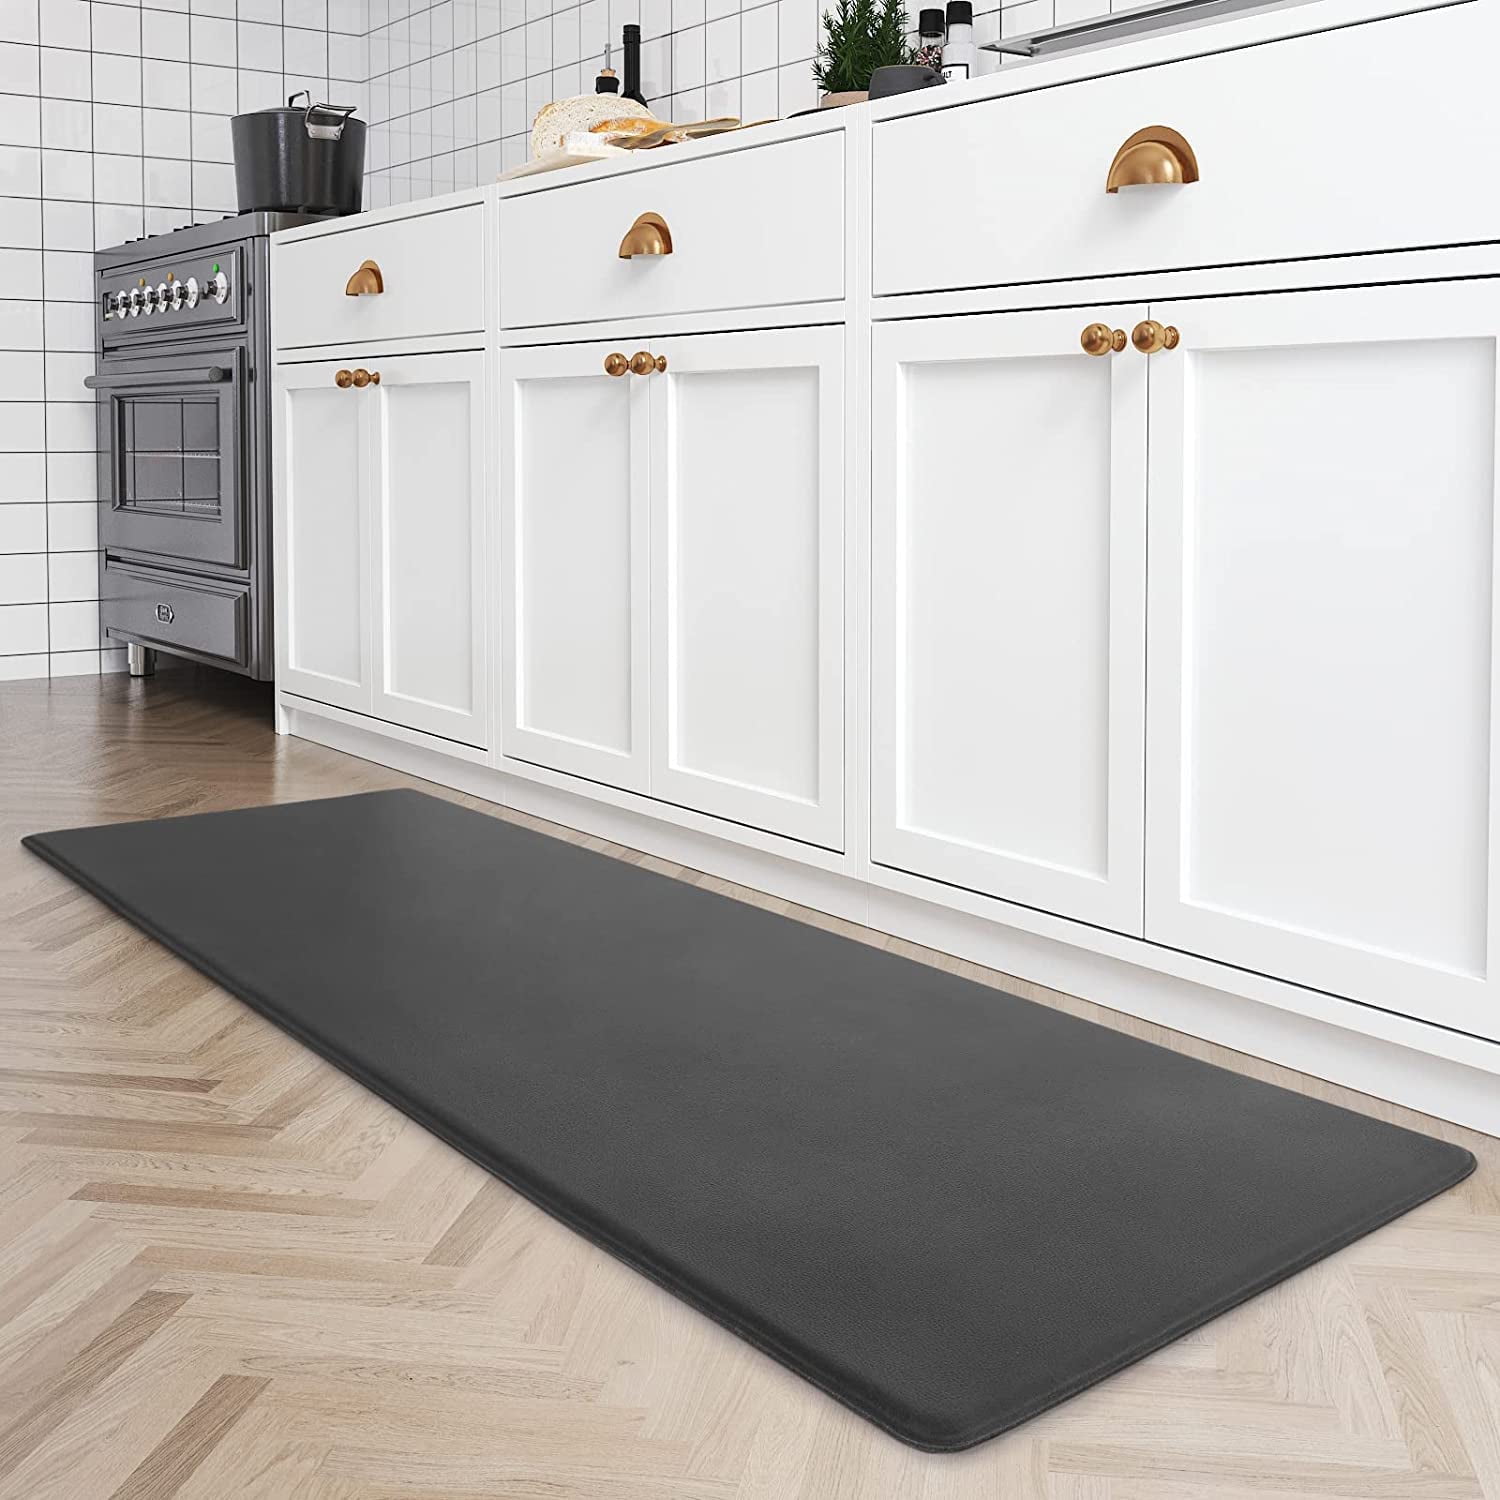 SIXHOME Anti Fatigue Mat for Kitchen Floor 17 x 32 Non-Slip Soft